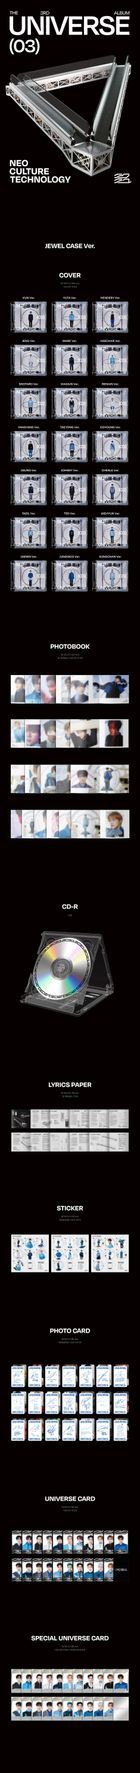 NCT Vol. 3 - Universe (Jewel Case Version) (Yangyang Version)